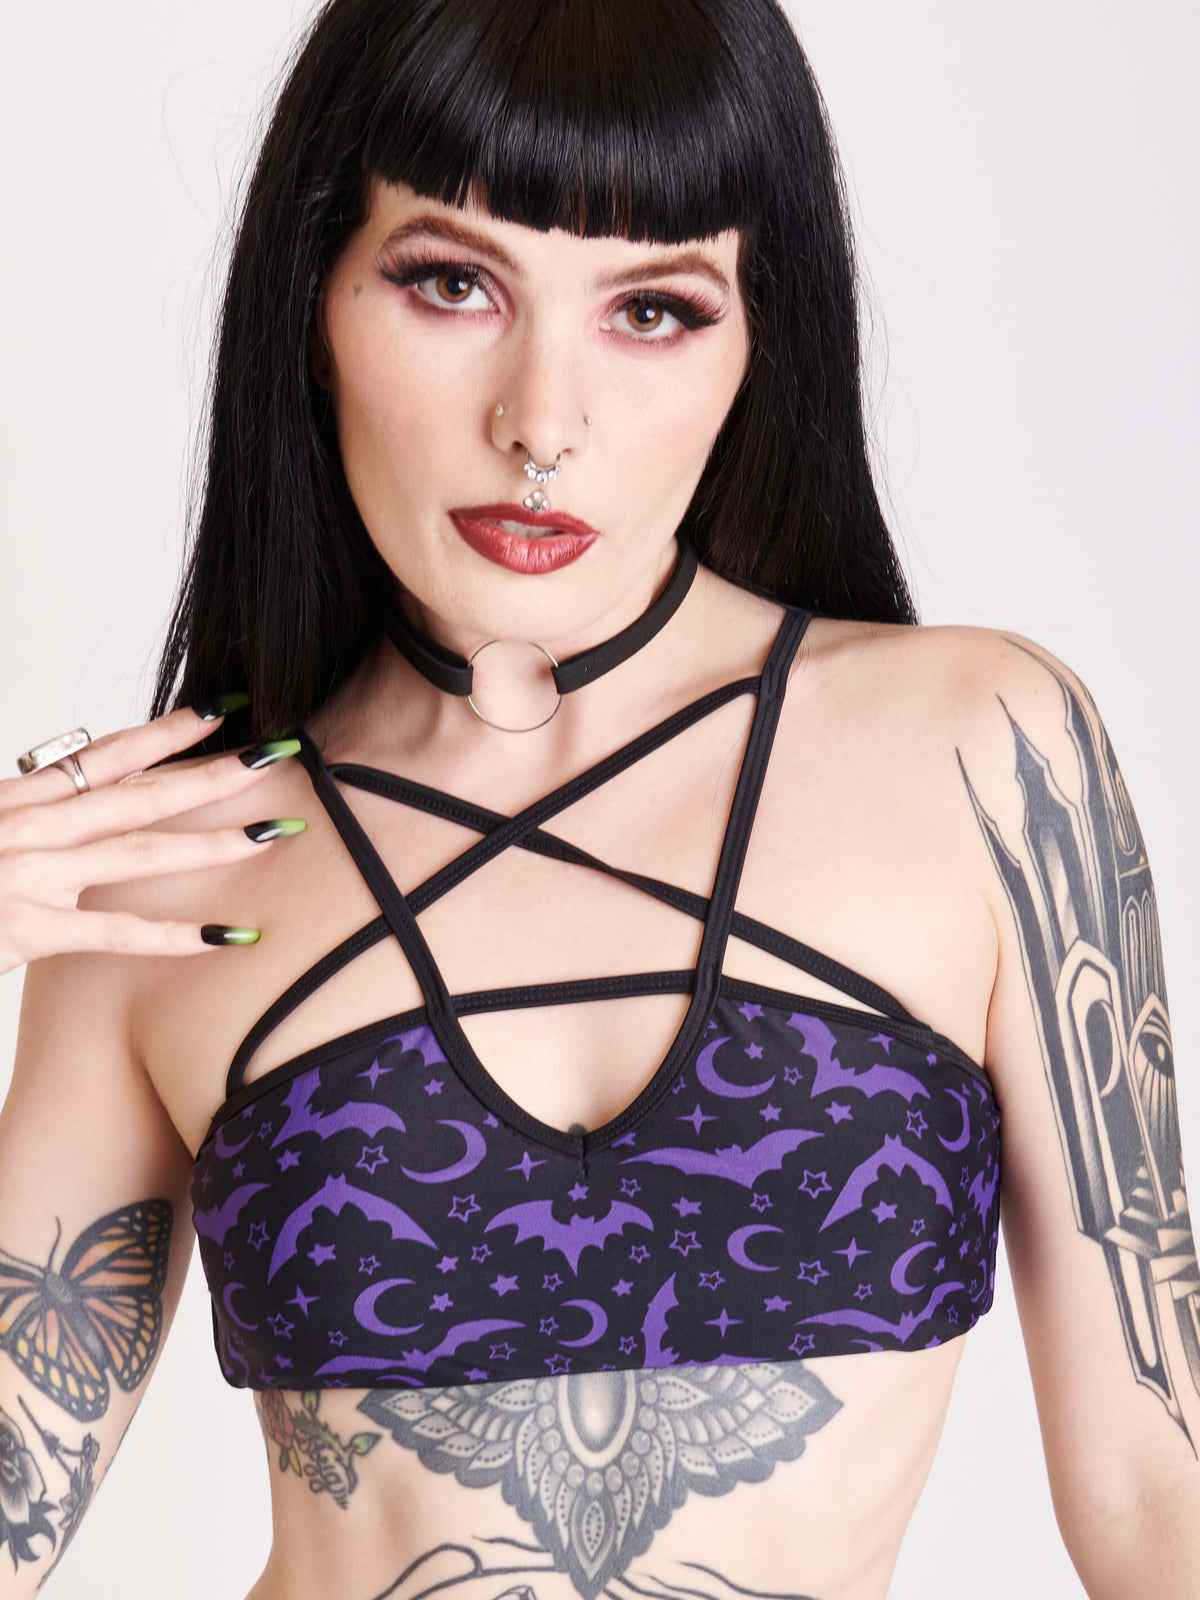 Black and purple bat print bikini top with pentagram strap detail